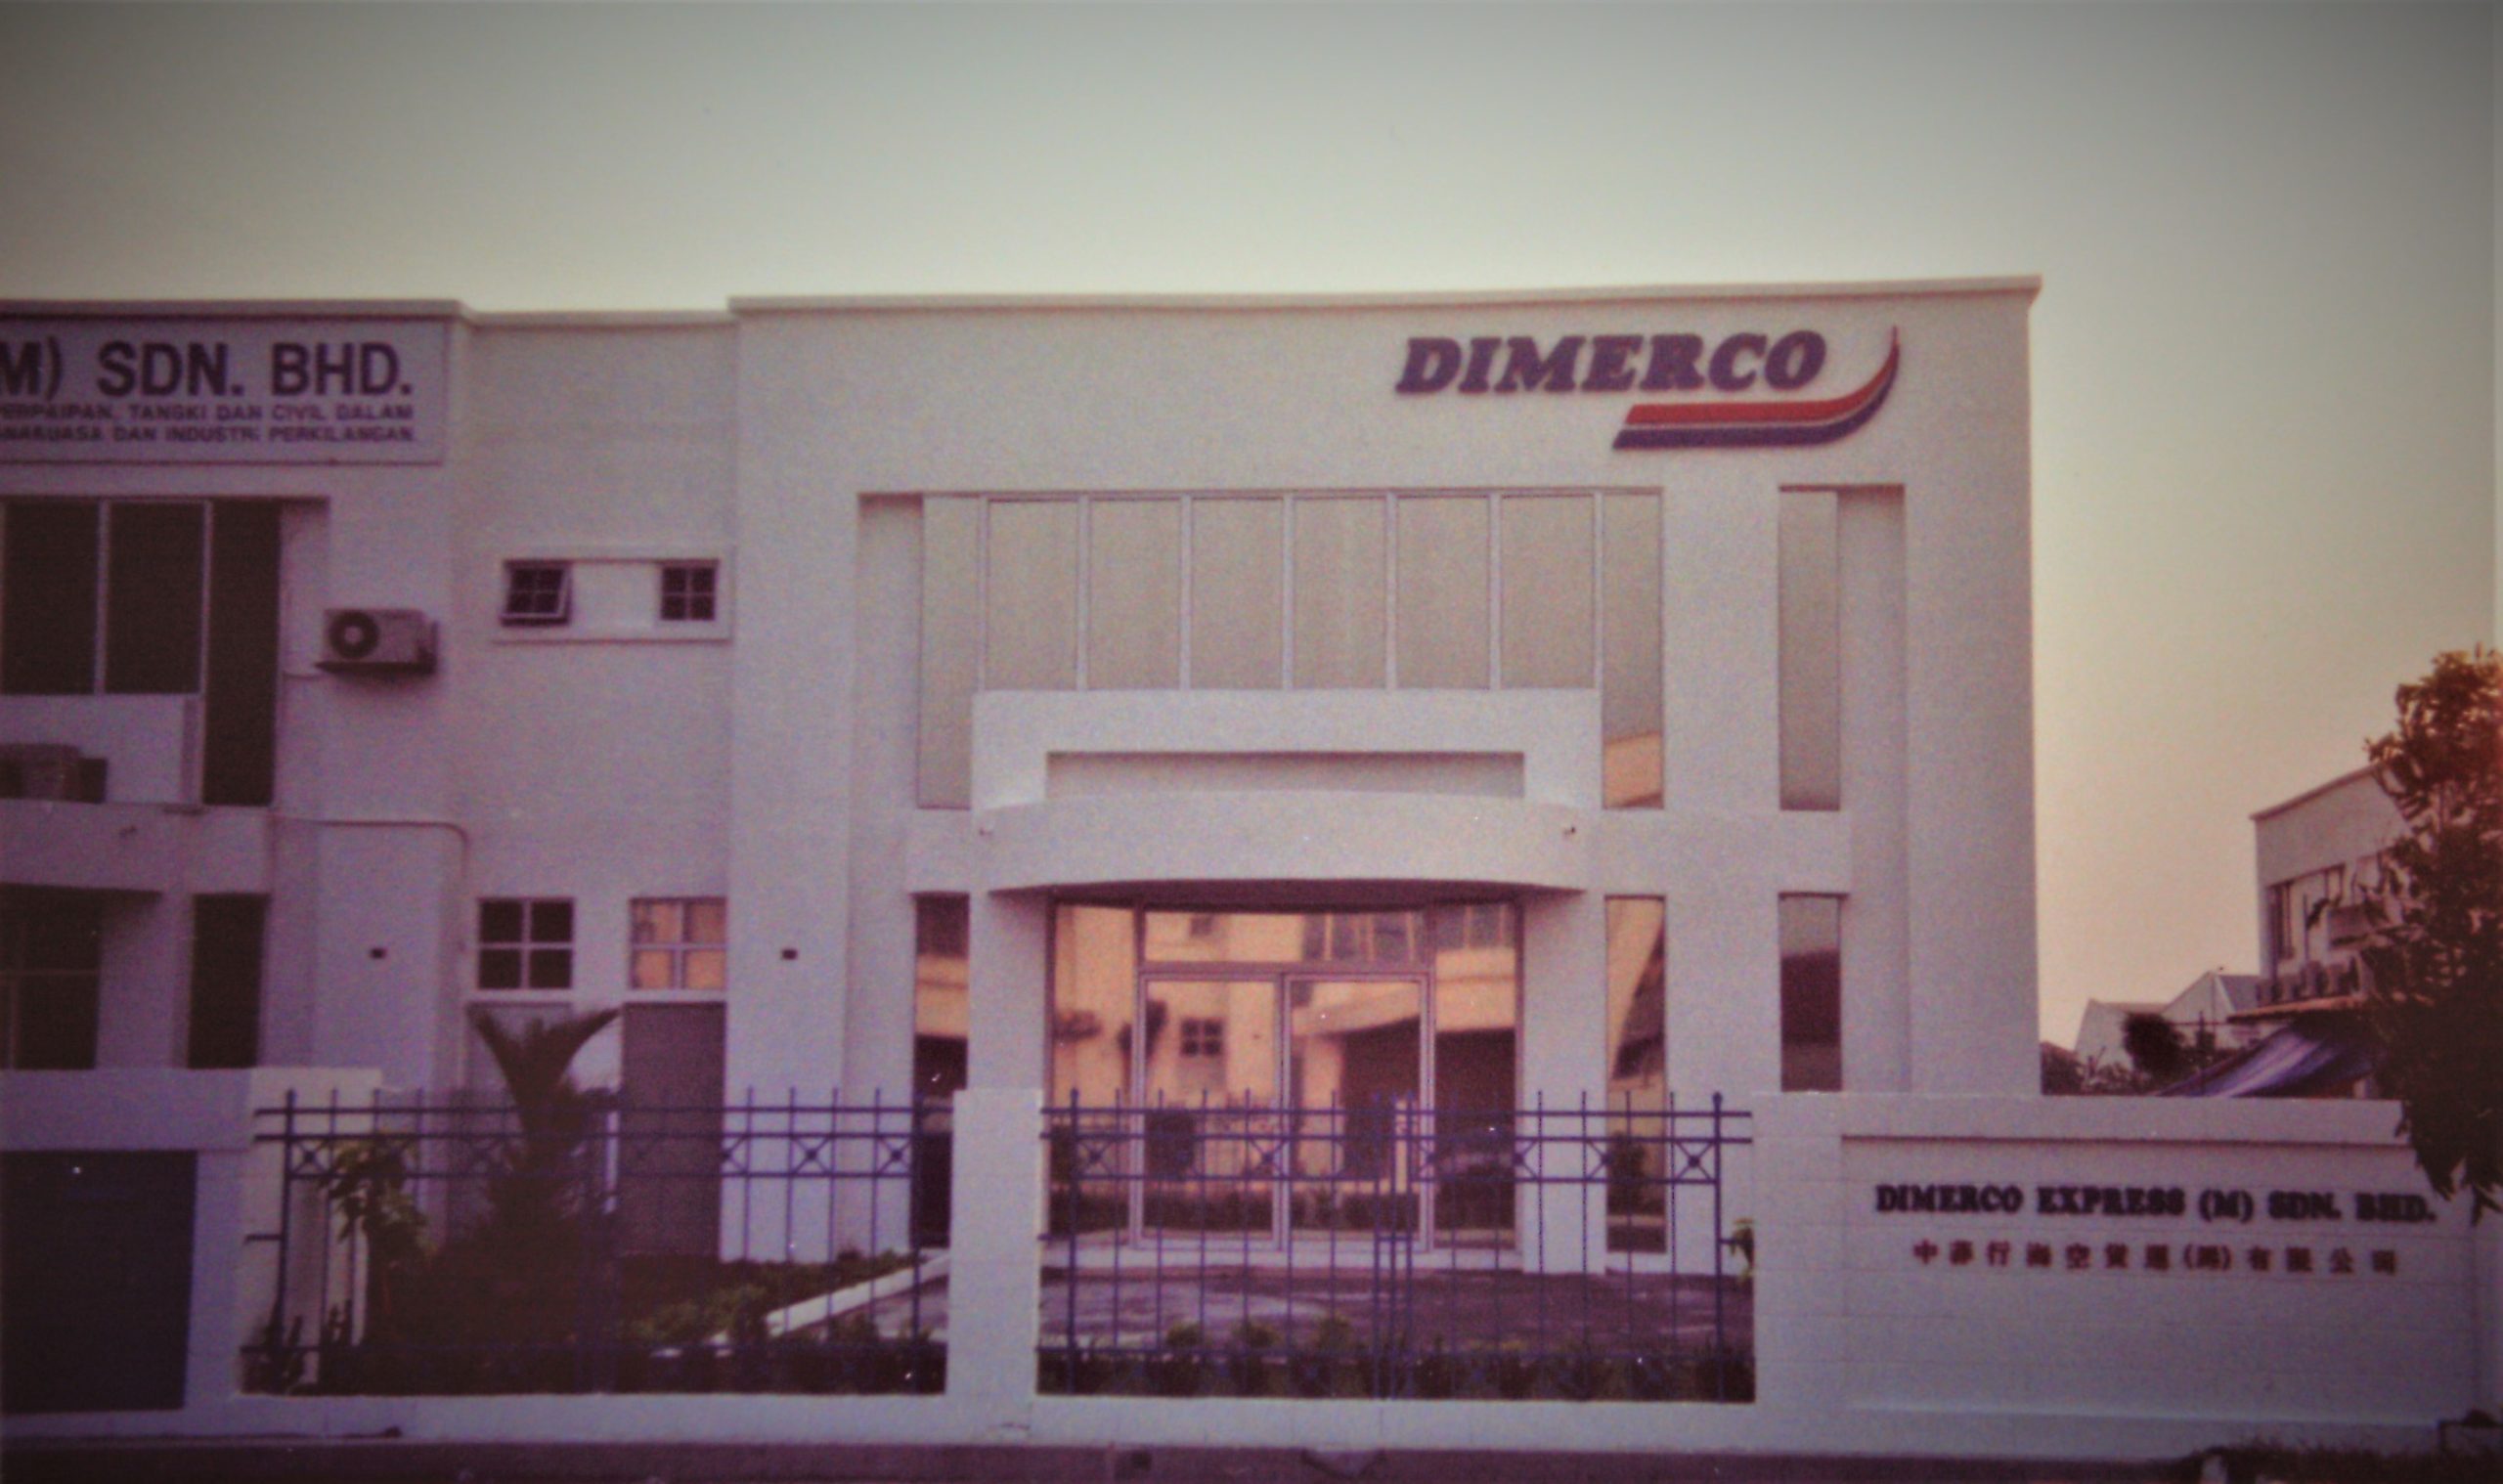 Dimerco history